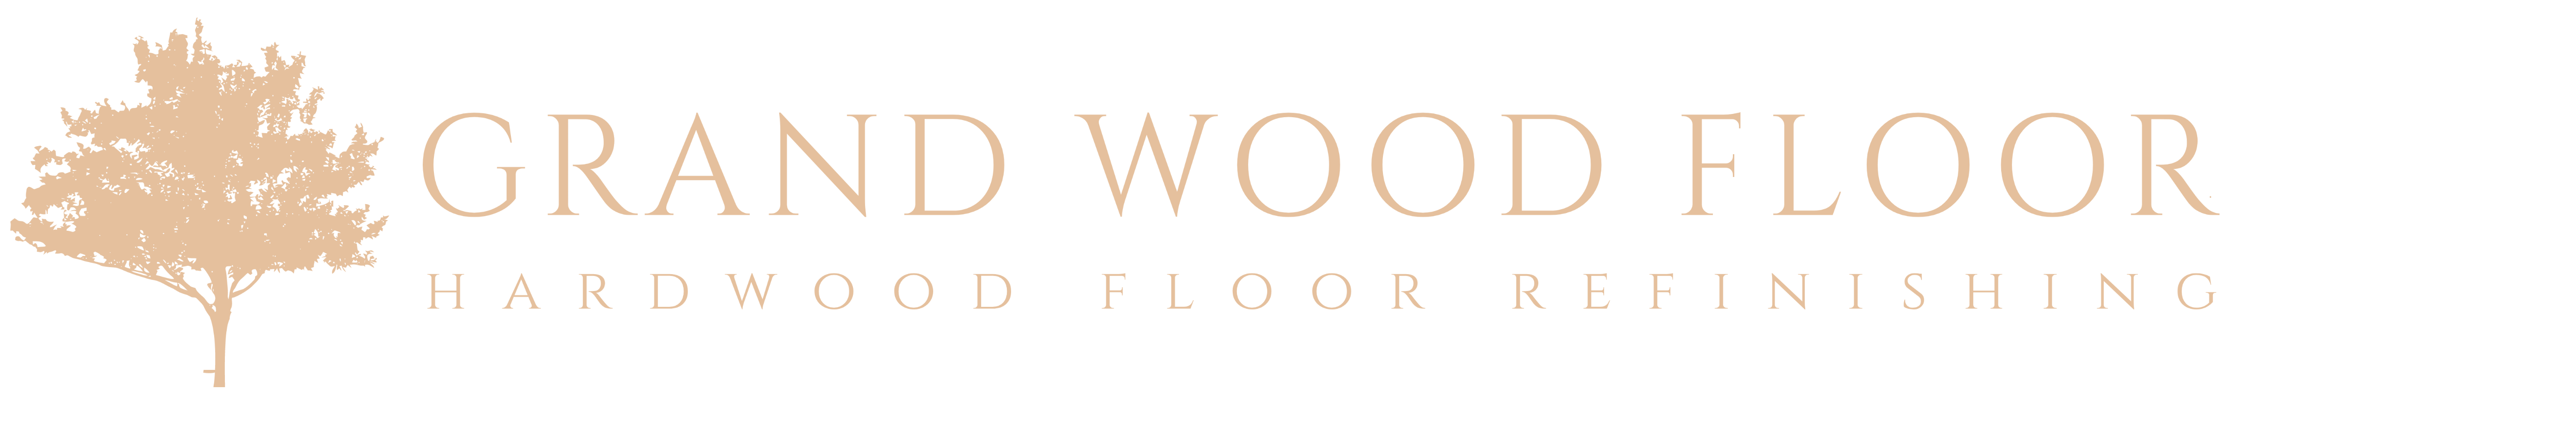 Grand Wood Floor - hardwood floors refinishing and installation